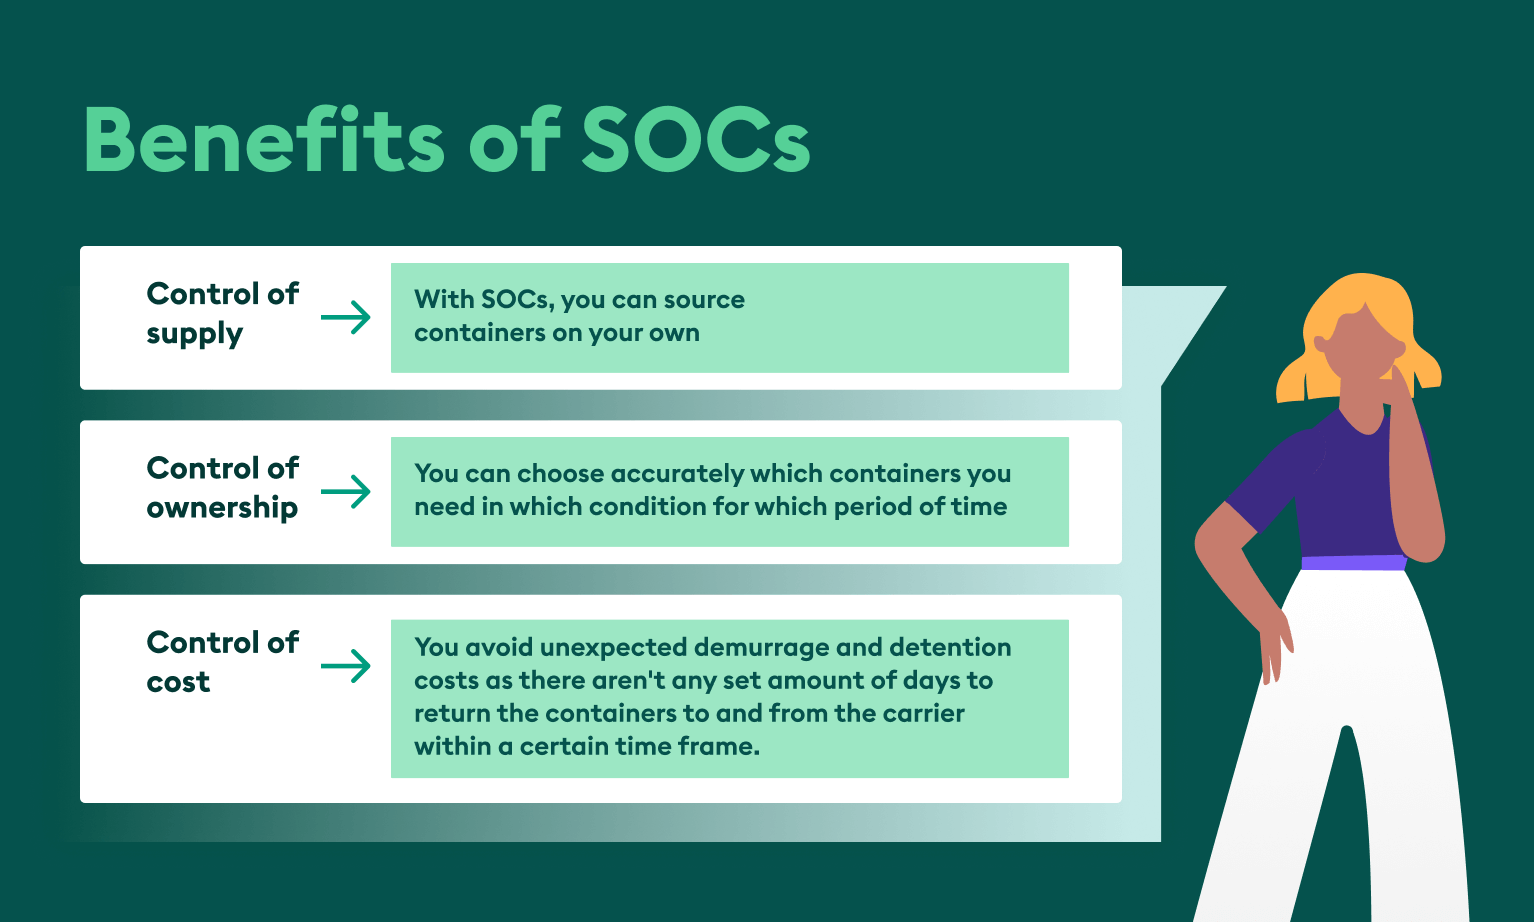 Benefits of SOCs